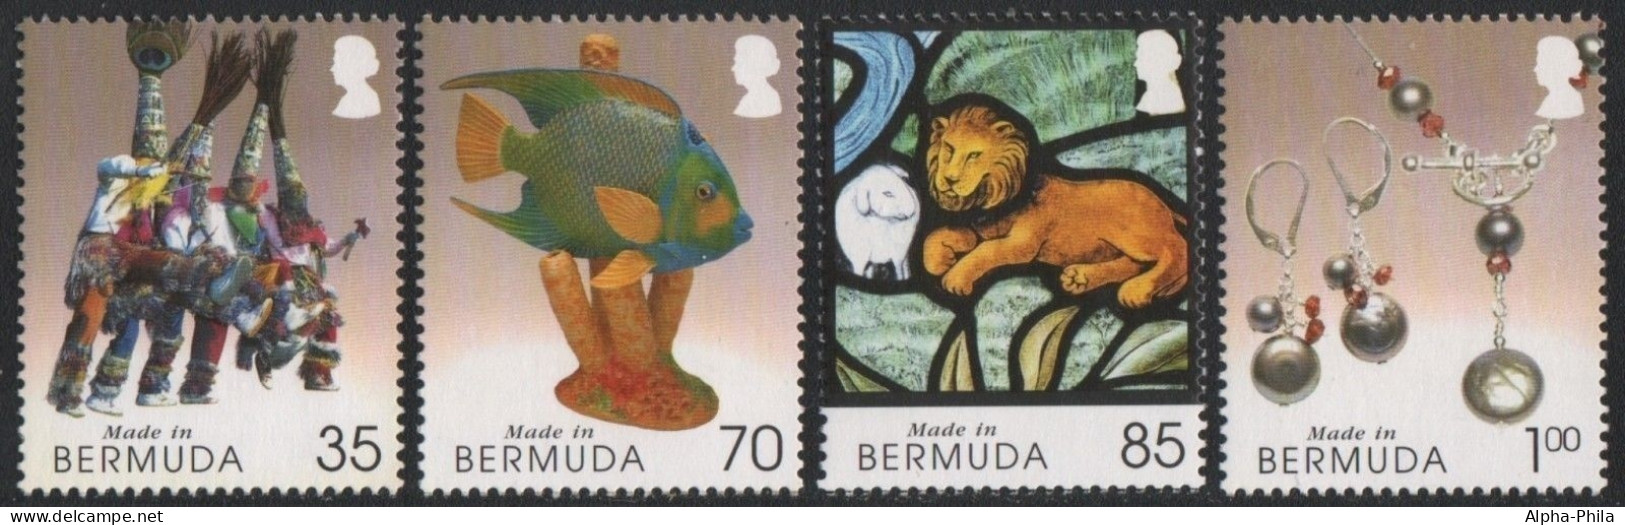 Bermuda 2005 - Mi-Nr. 891-894 ** - MNH - Kunsthandwerk - Bermuda